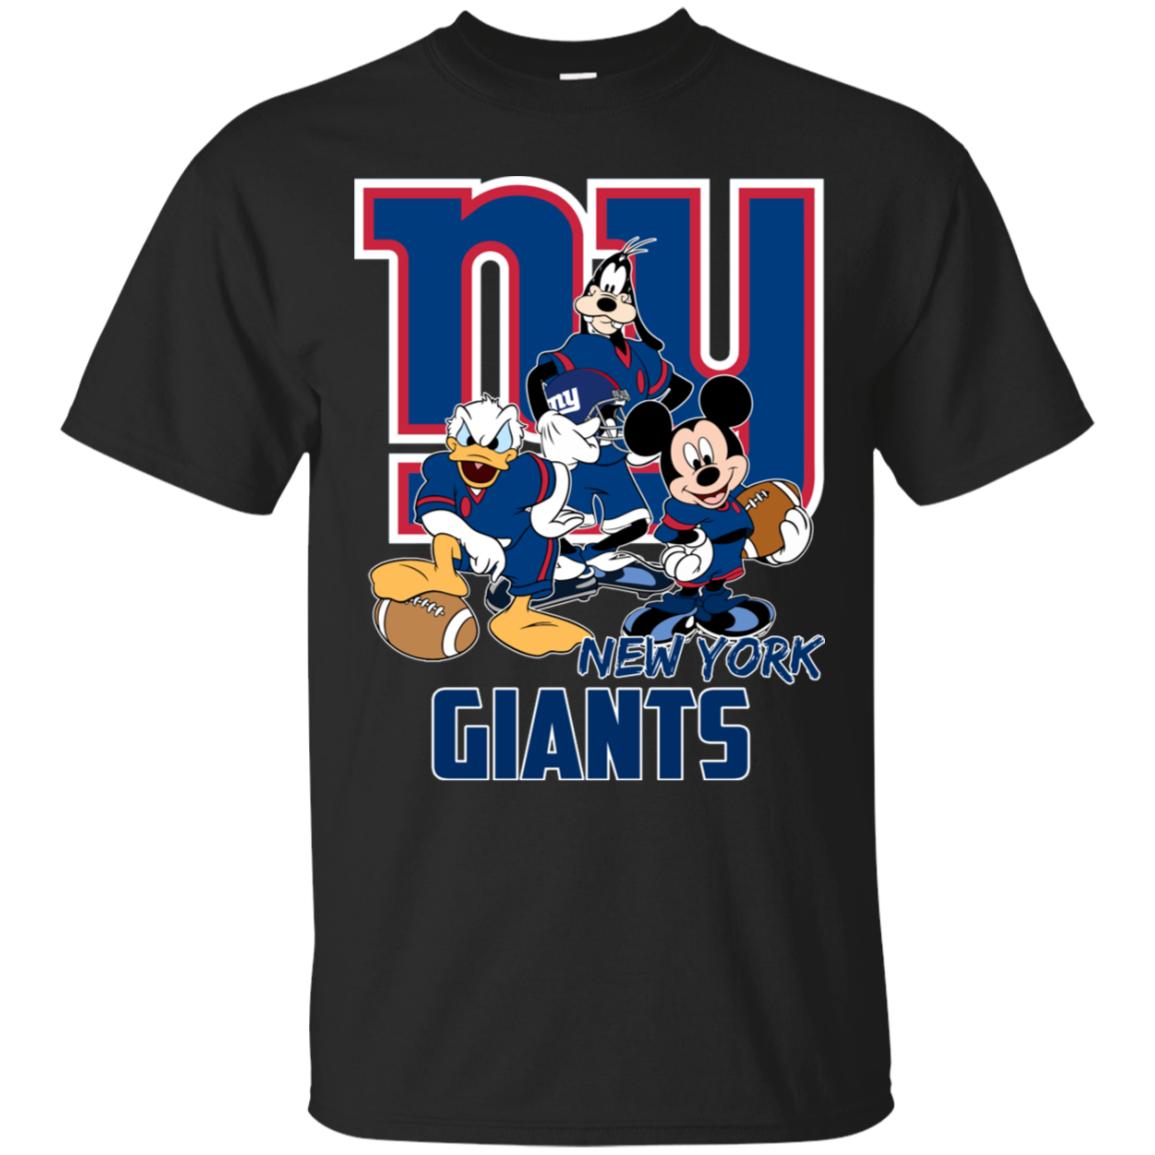 Disney Mickey, Donald and Goofy are Giants Fan Funny Football T-Shirt